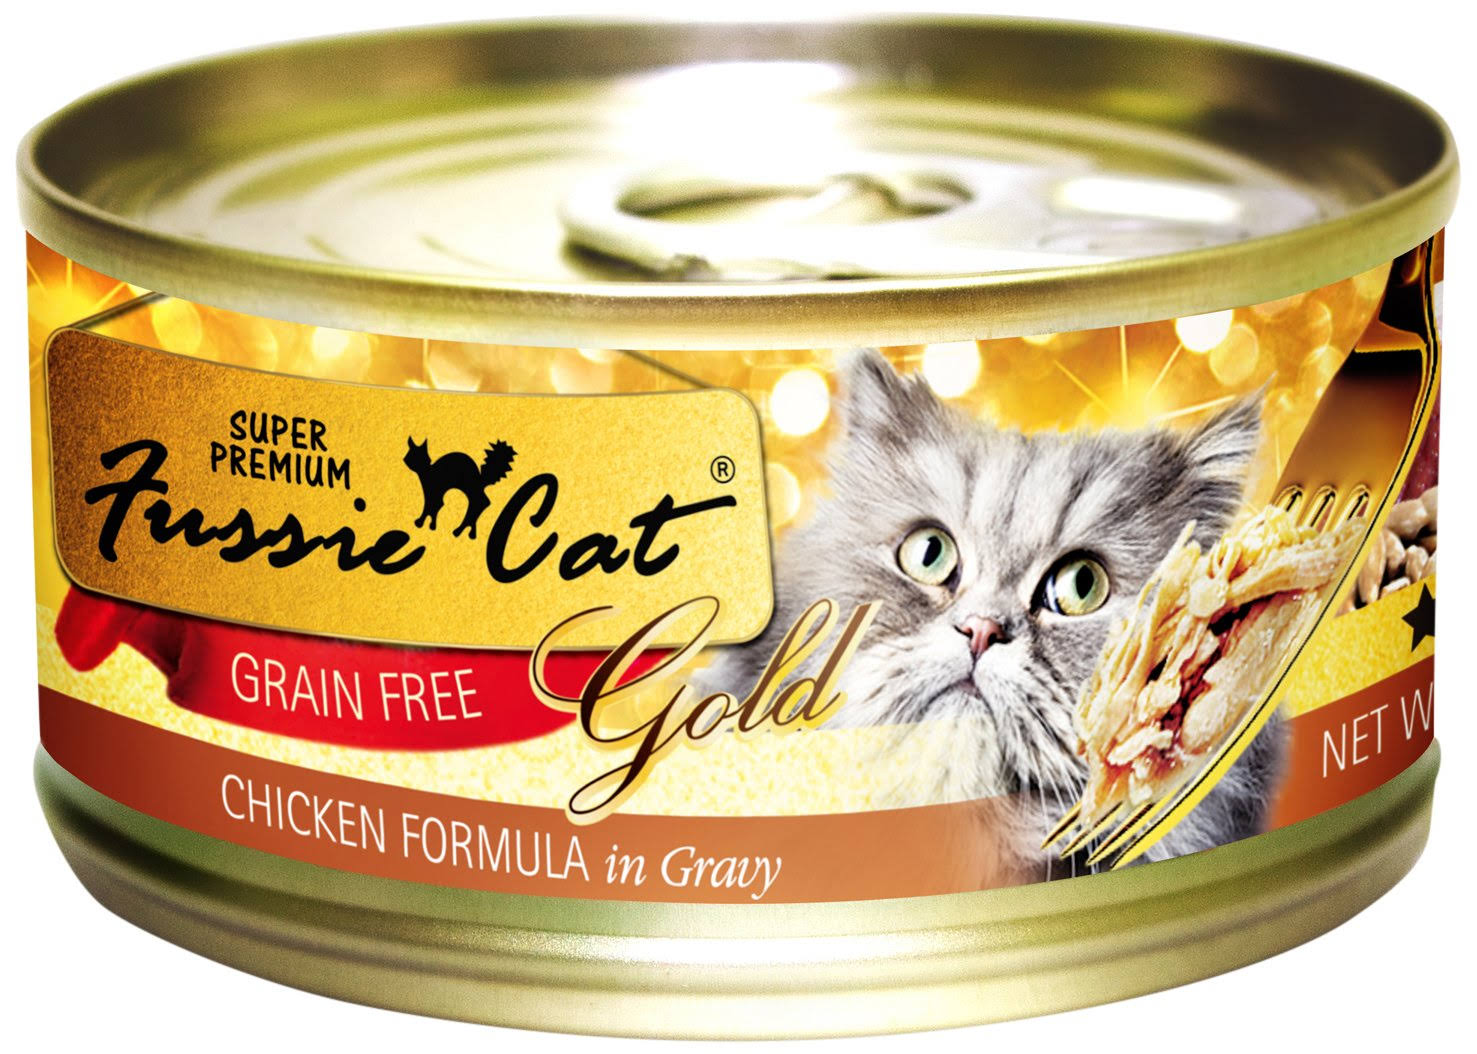 Fussie Cat Super Premium Chicken Formula in Gravy Pet Food, 2.8 oz. Can (Pack of 24)